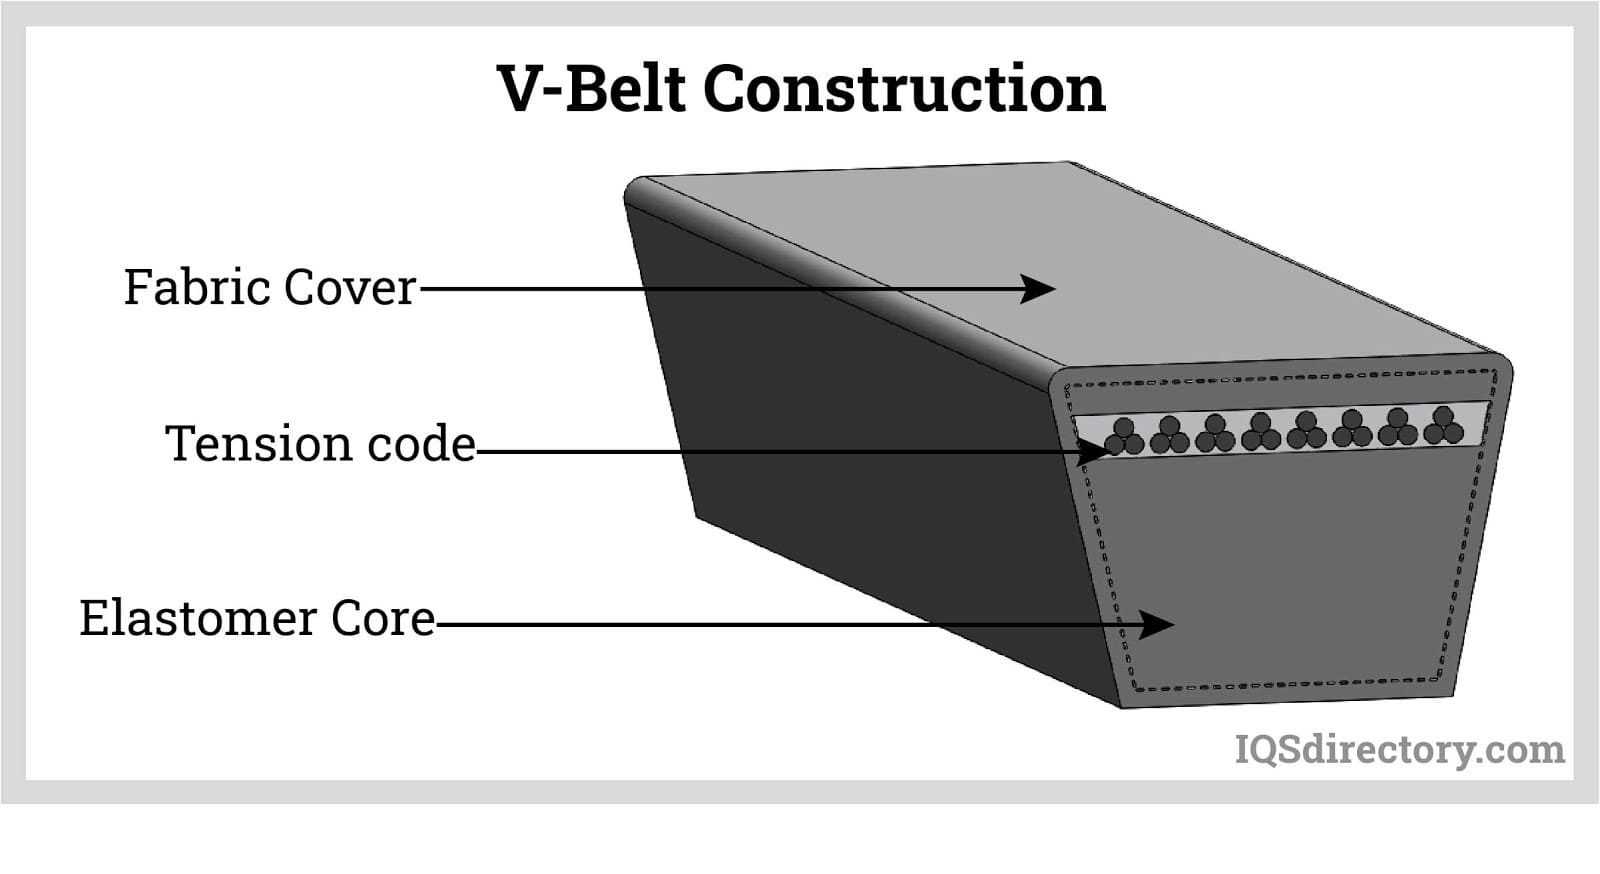 V-Belt Construction